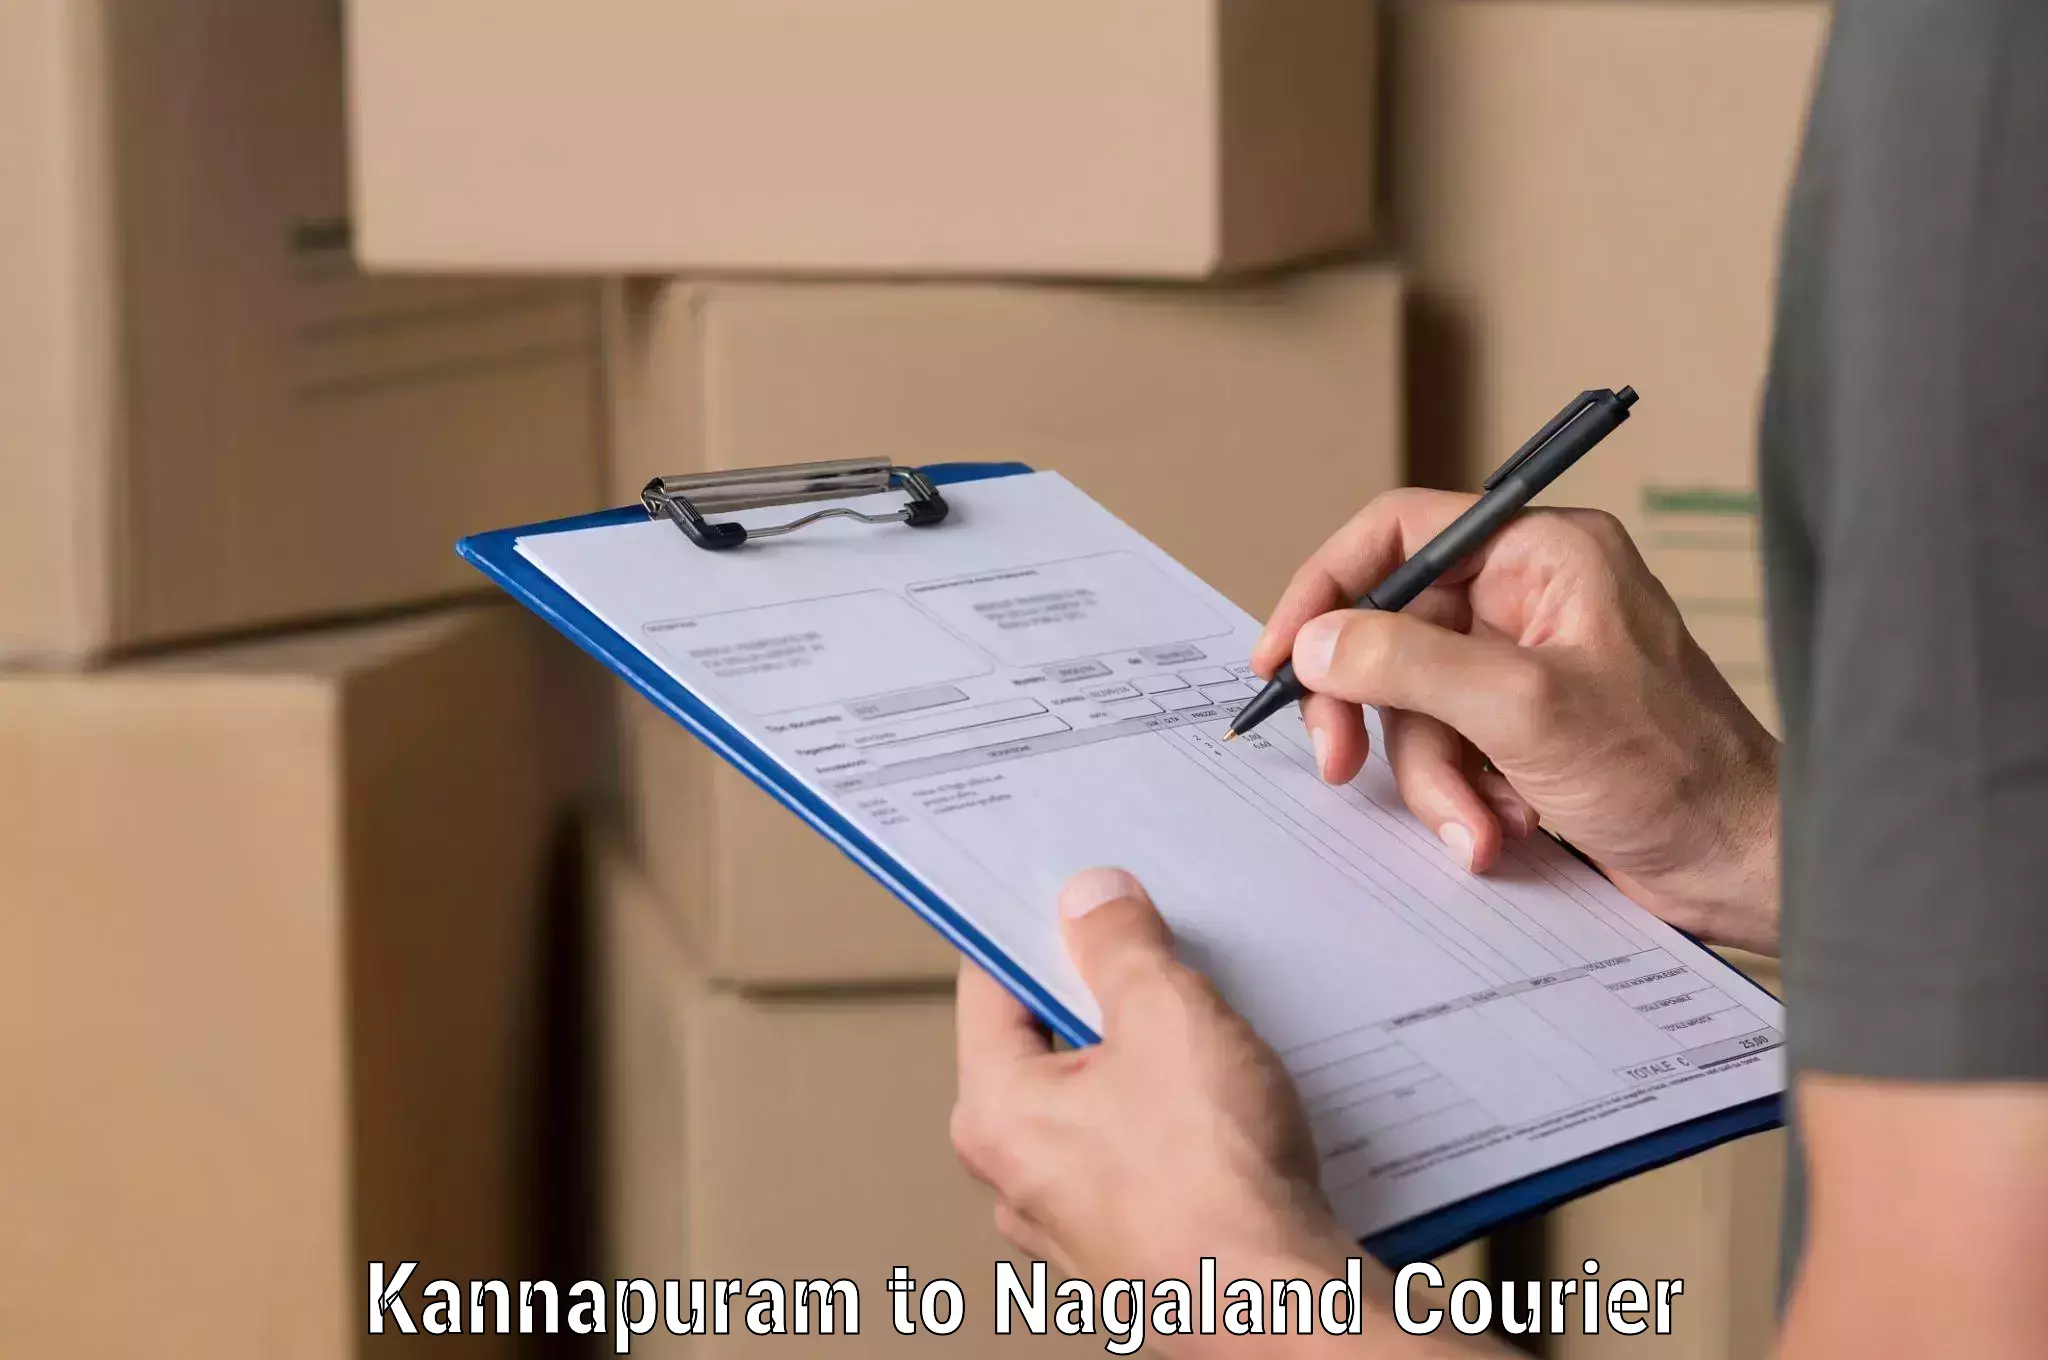 Courier service partnerships in Kannapuram to Kohima